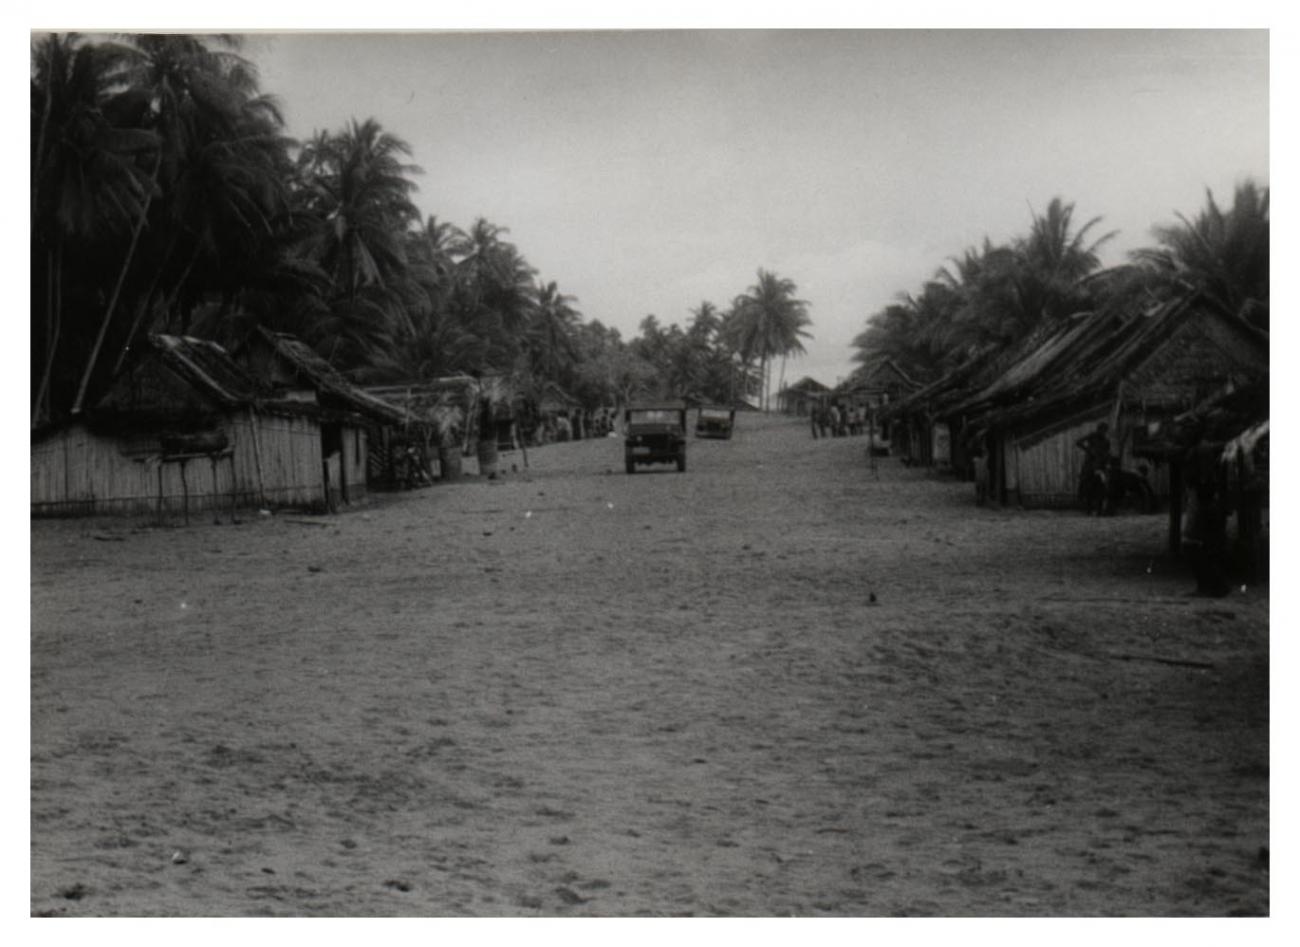 BD/54/32 - 
Kampong Kompol I, Merauke
